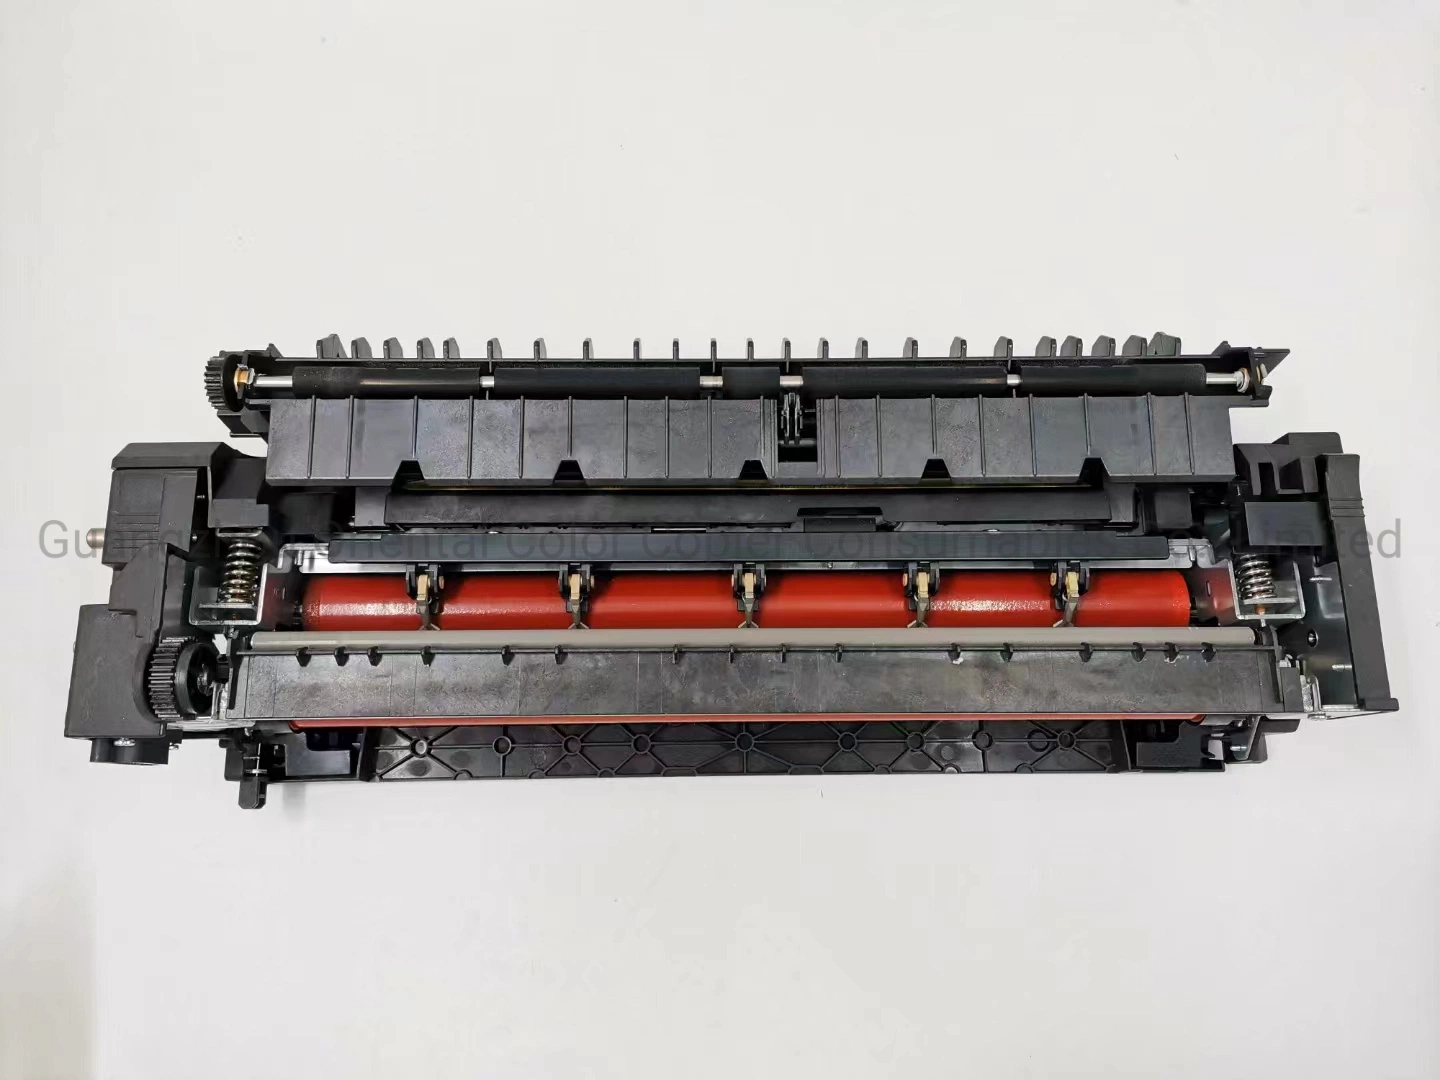 Original Fuser Unit for Kyocera Compound Photo Copy Printer Copier Fk8350 Fk8550 Fk8300 Fk8500 Taskalfa 2552ci 3252ci 4252ci 4002I 5002I 6002I